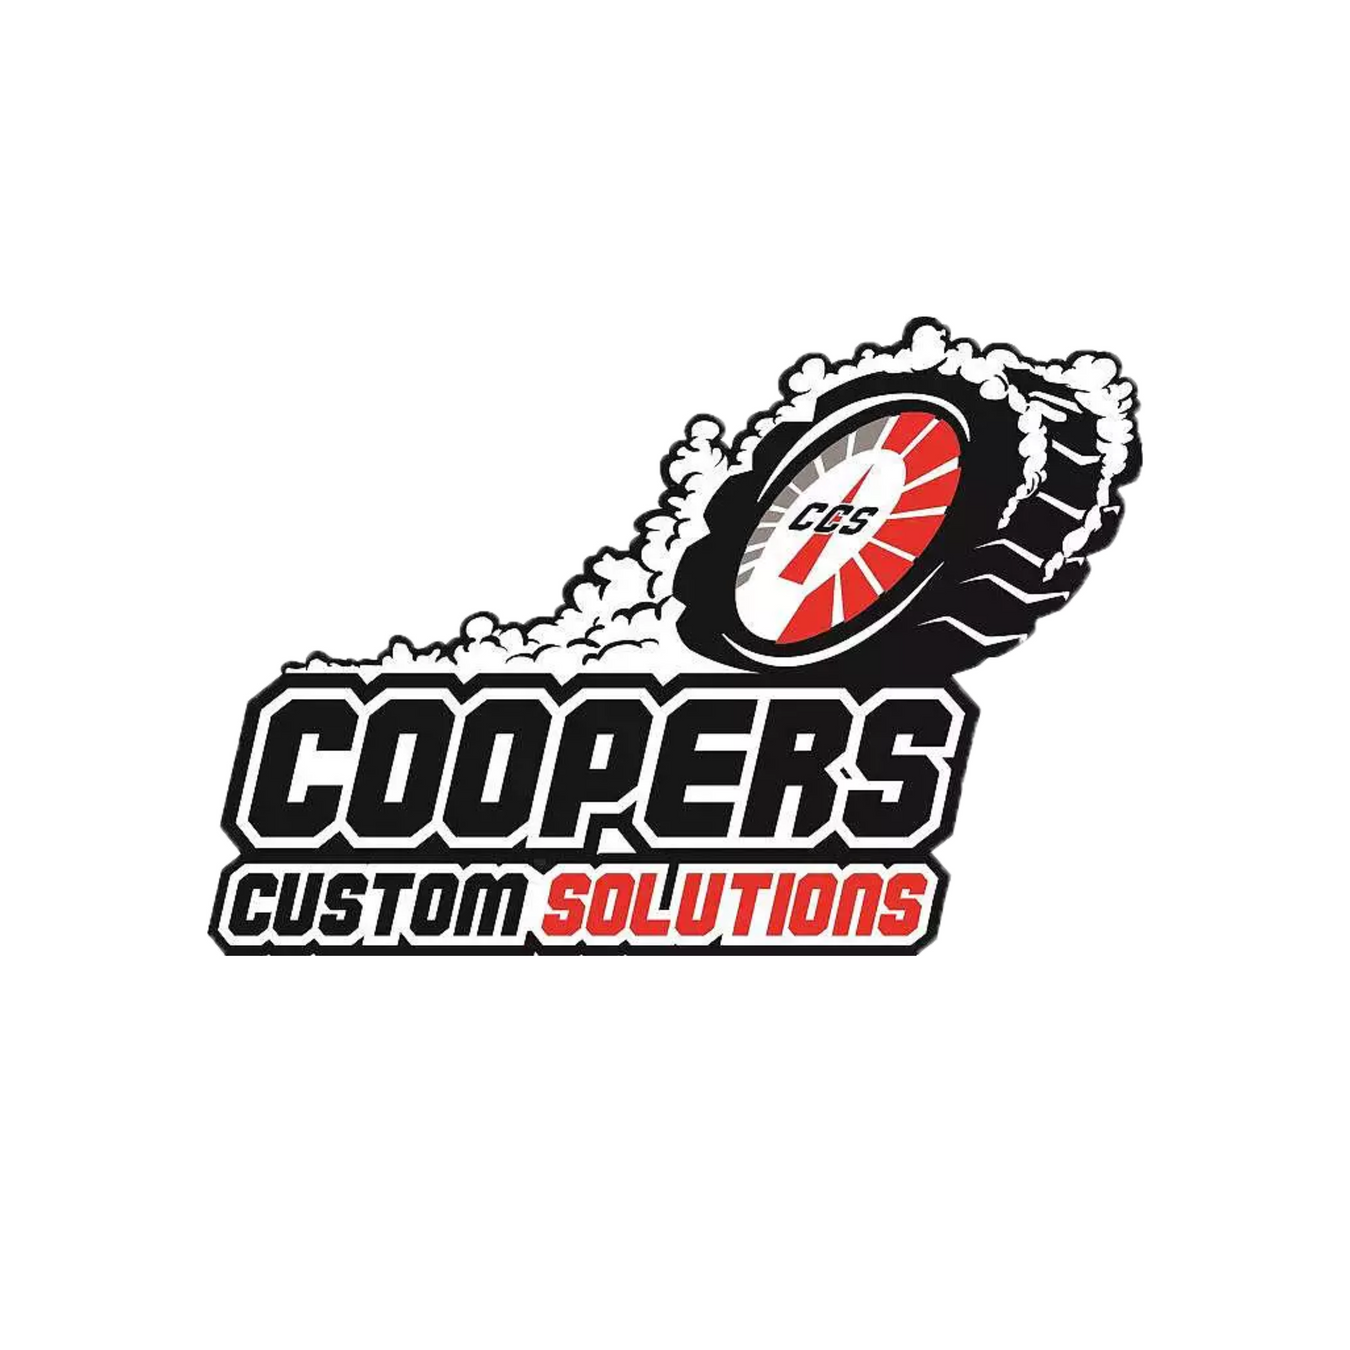 Coopers Custom Solutions (CCS)